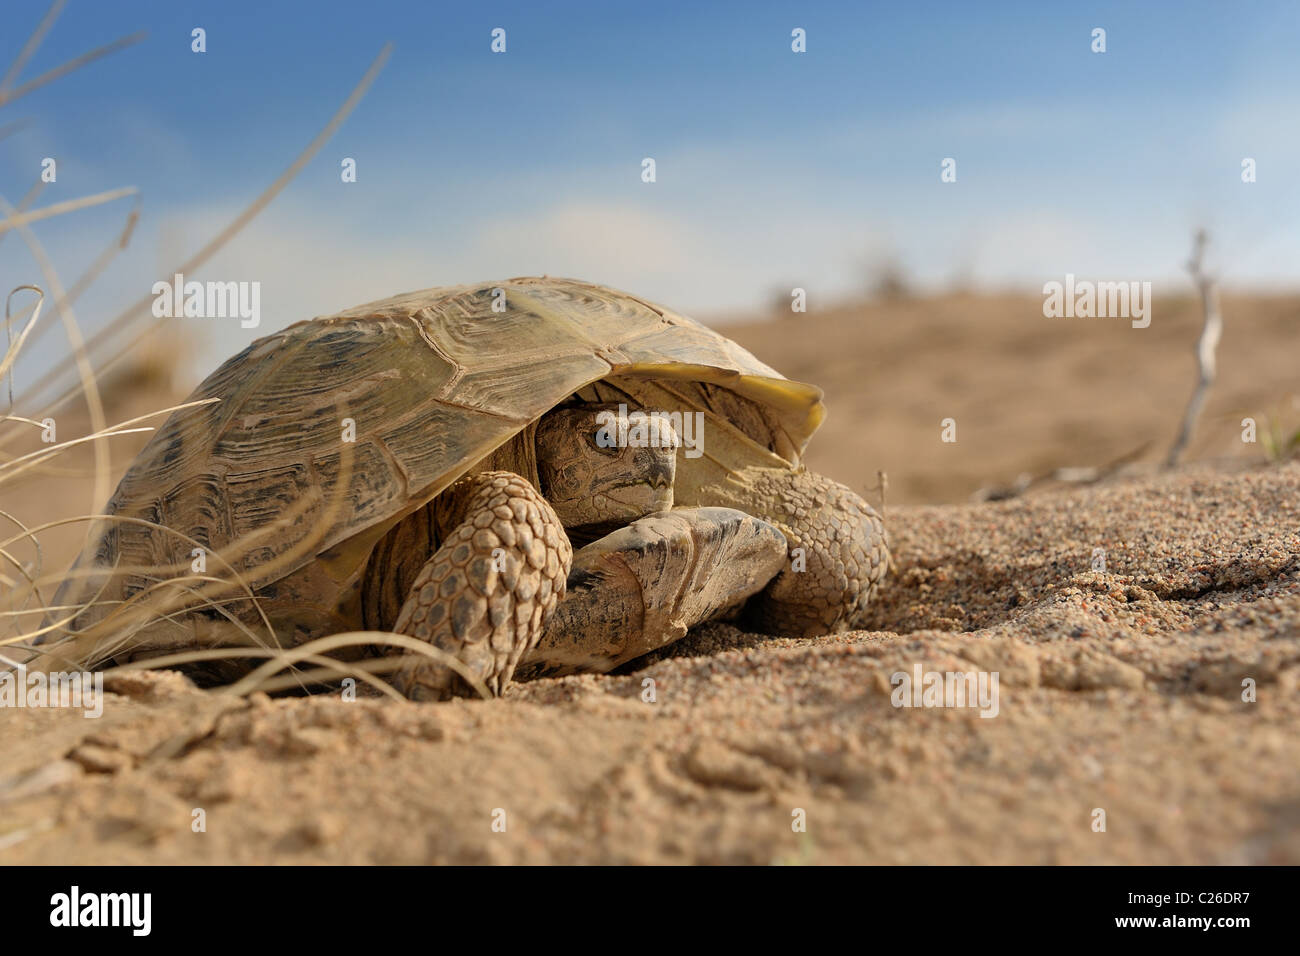 The Russian Tortoise in sand desert. Stock Photo